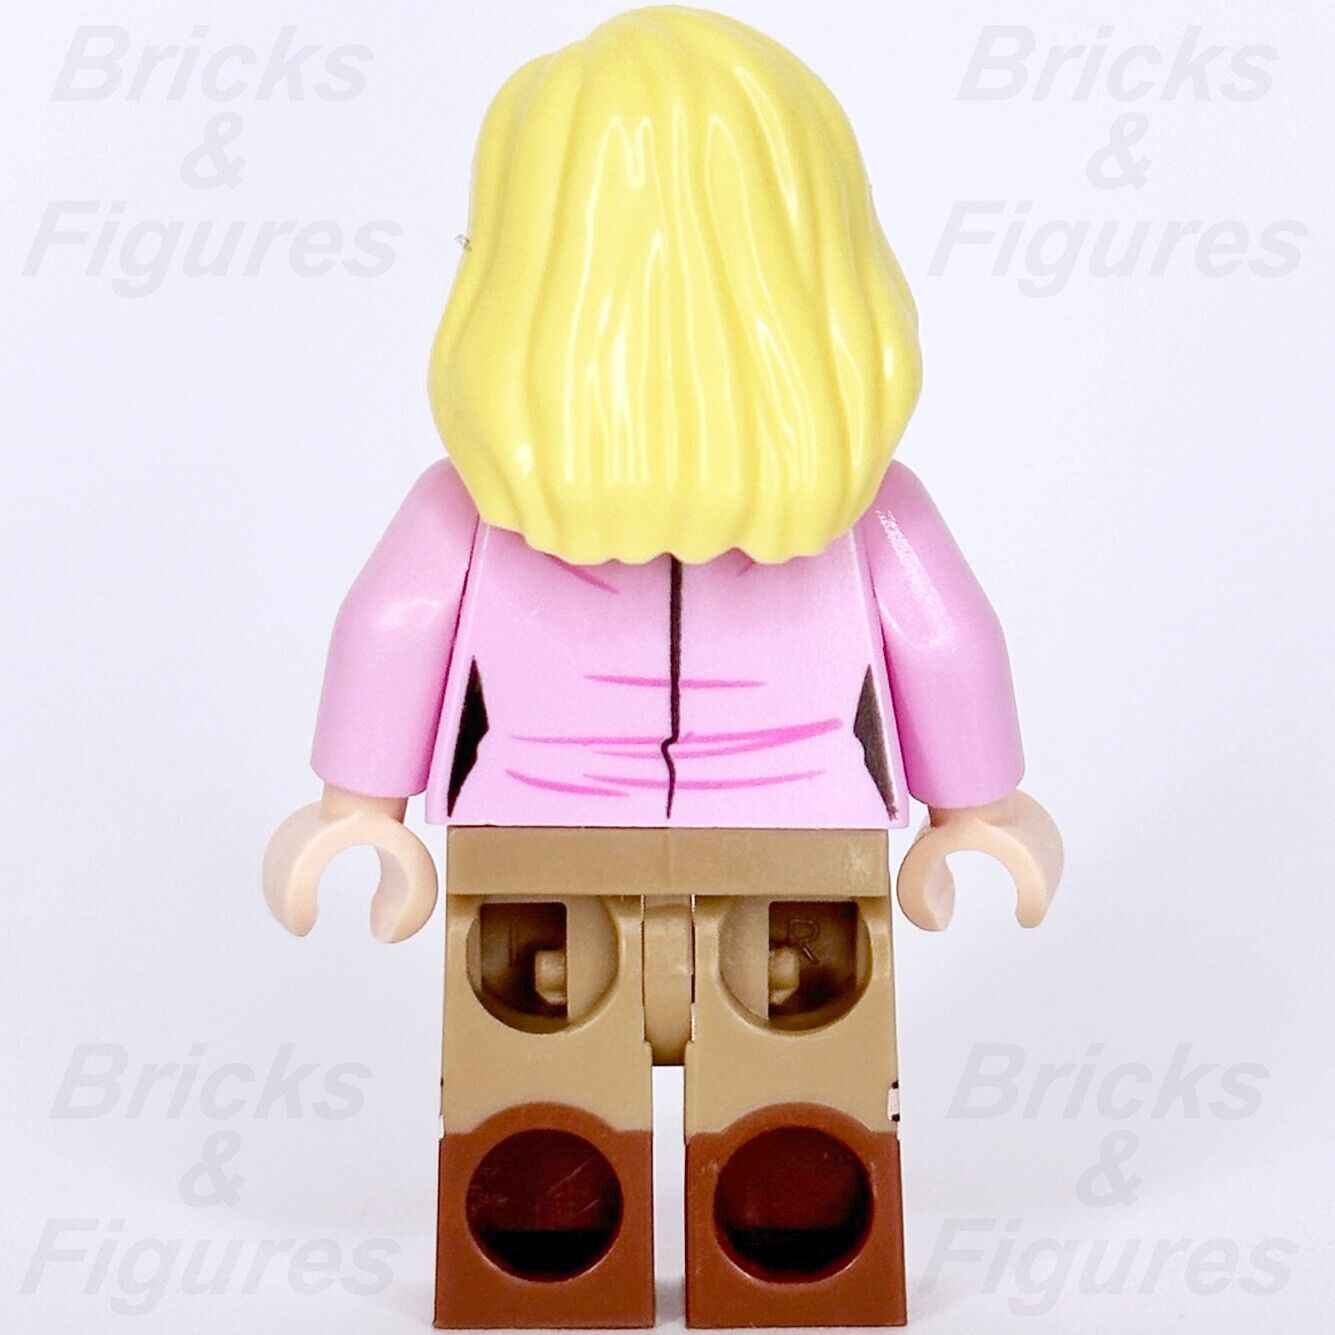 LEGO Ellie Sattler Minifigure Jurassic World Jurassic Park 75932 jw028 Ellen - Bricks & Figures